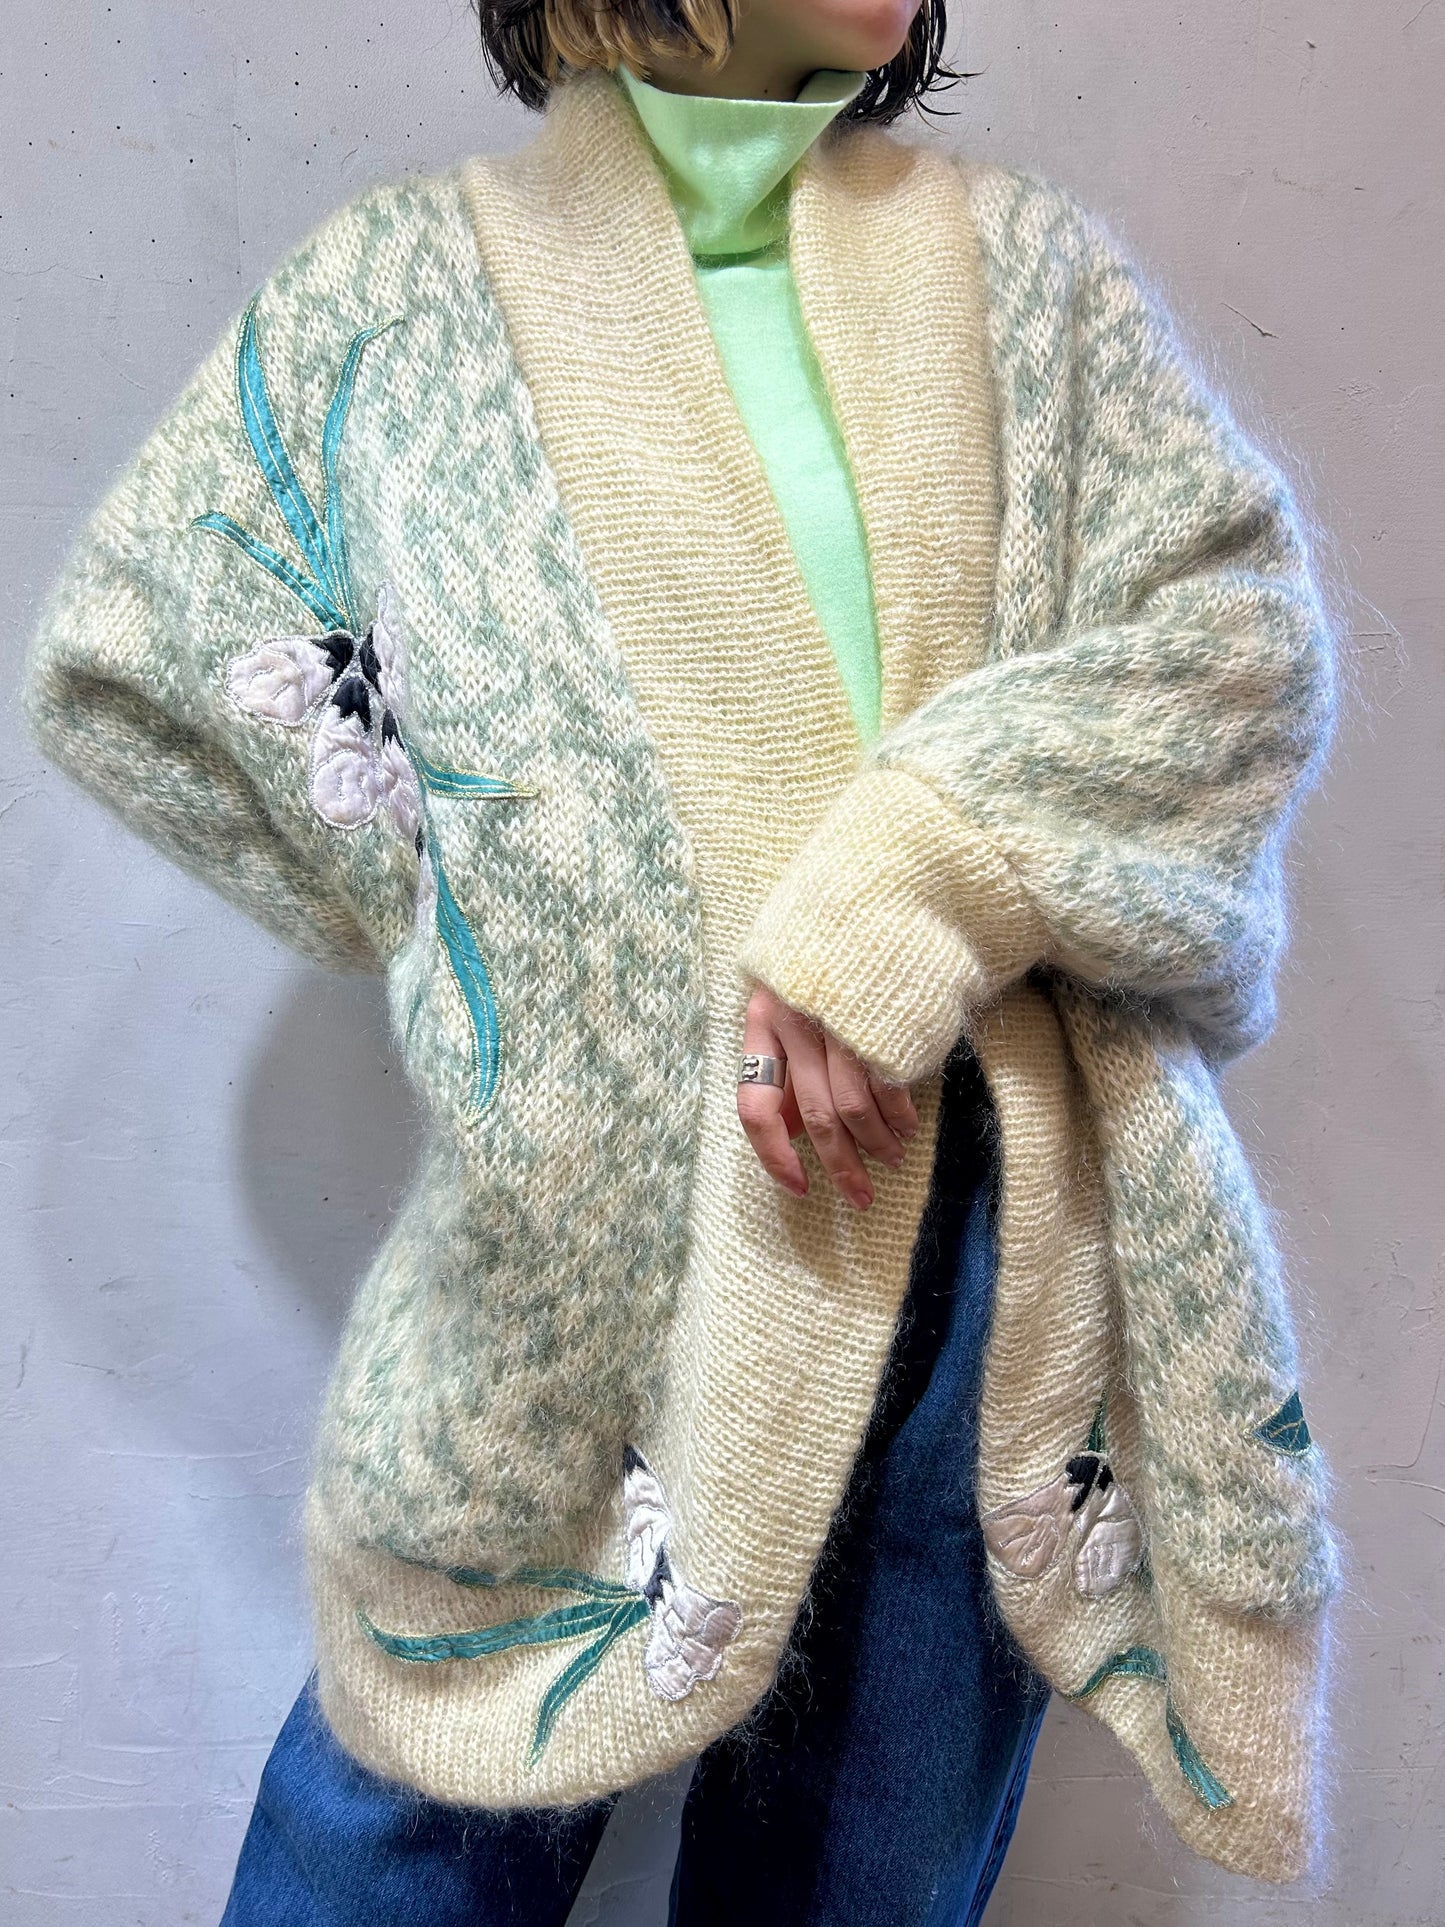 Vintage Knit Cardigan [L25837]